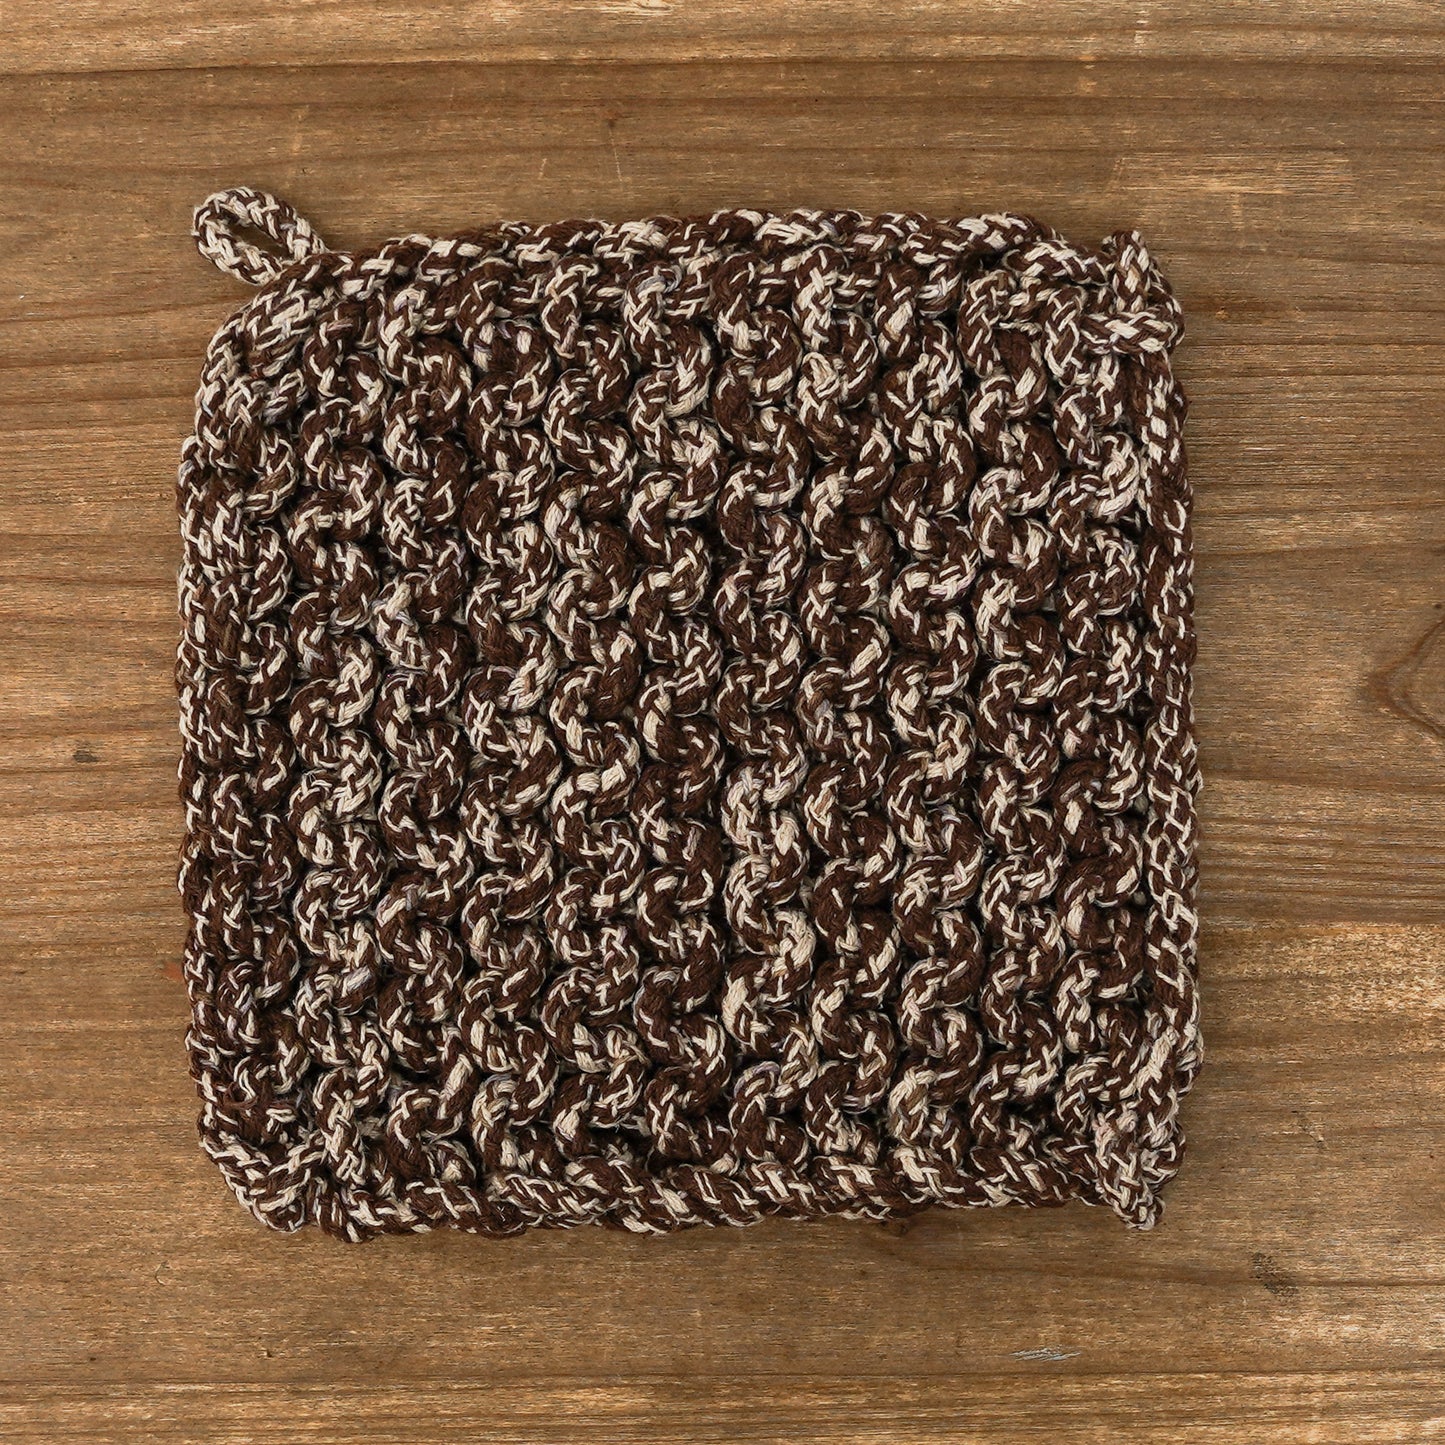 Square Crocheted Potholder - Speckled